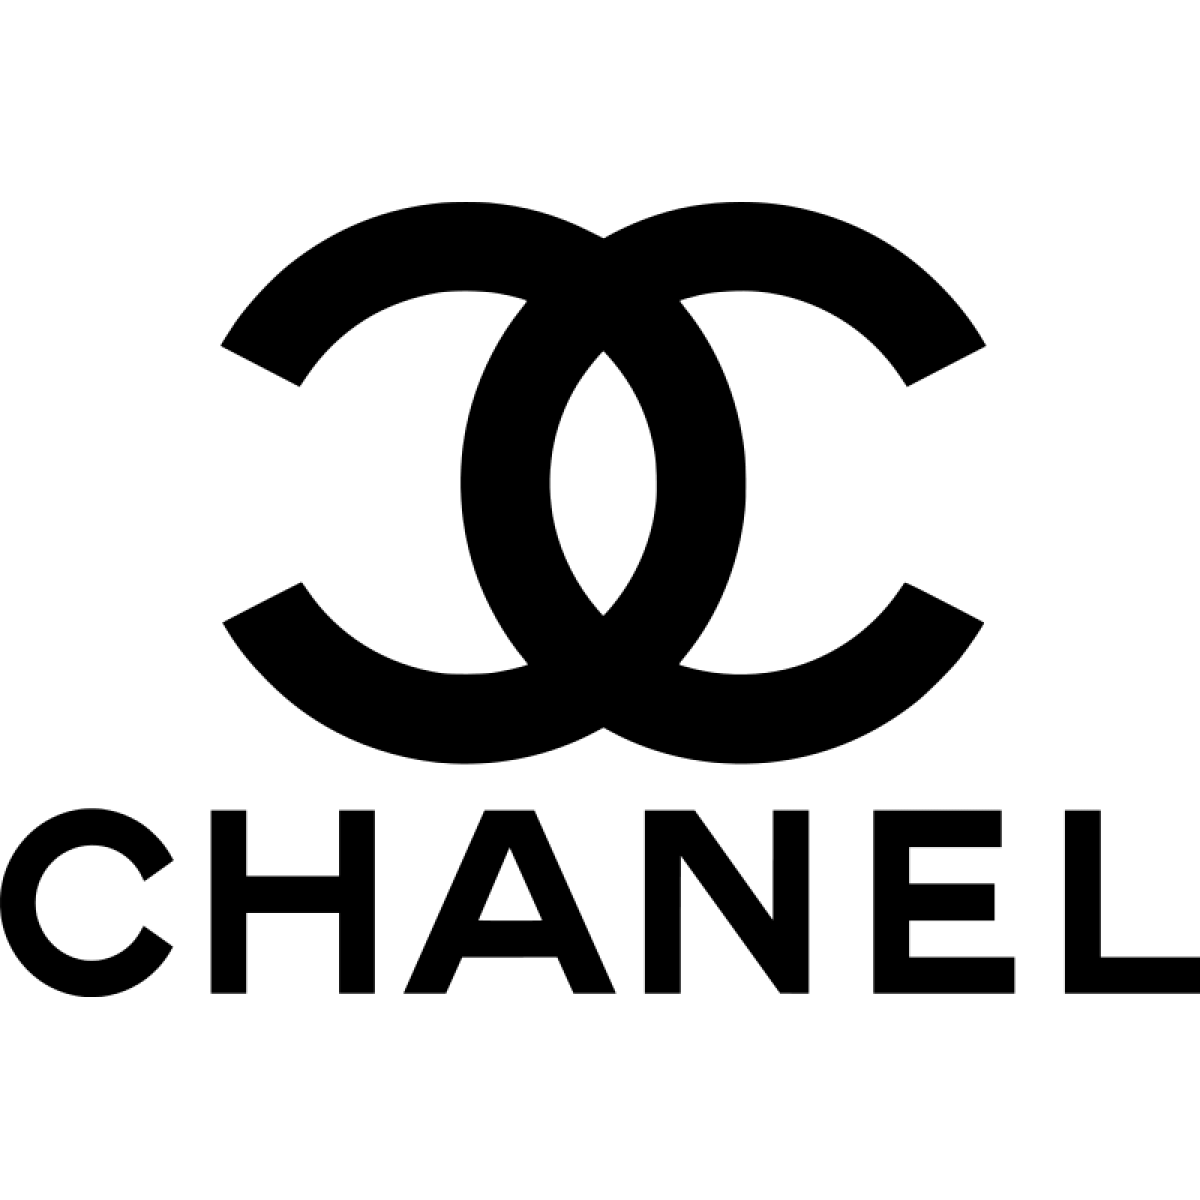 Channel Fashion Logo - channel fashion logo - Google Search | Logos | Chanel logo, Chanel ...